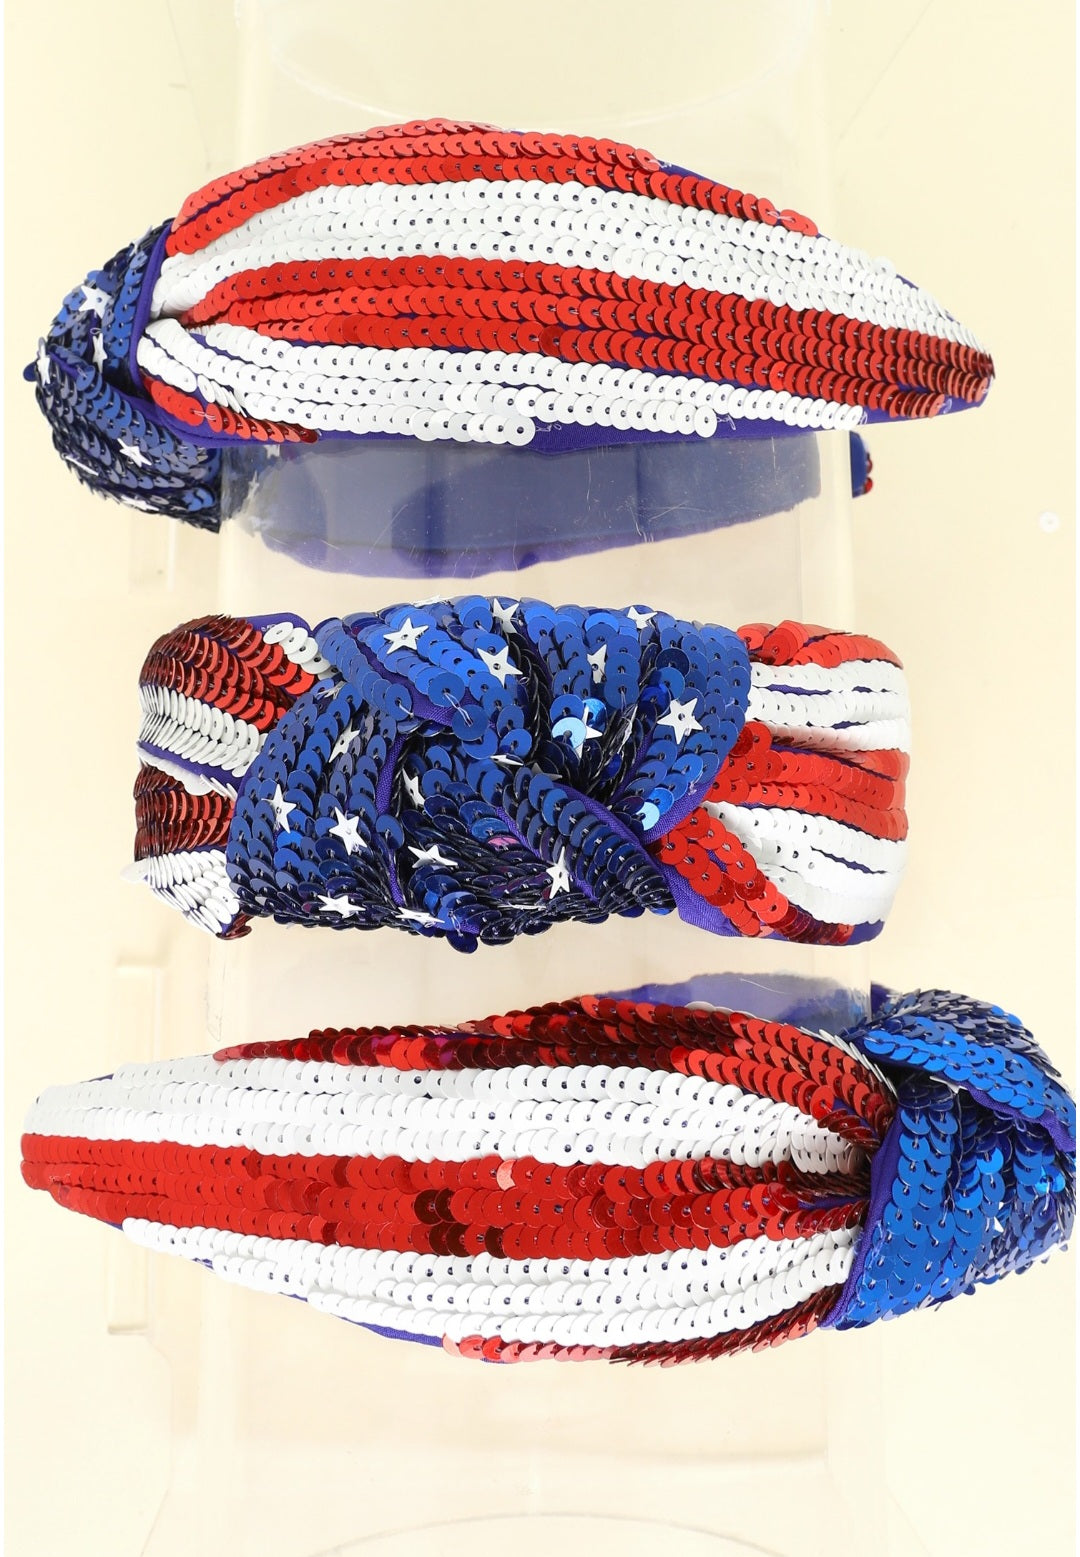 Sequin American Flag Headband